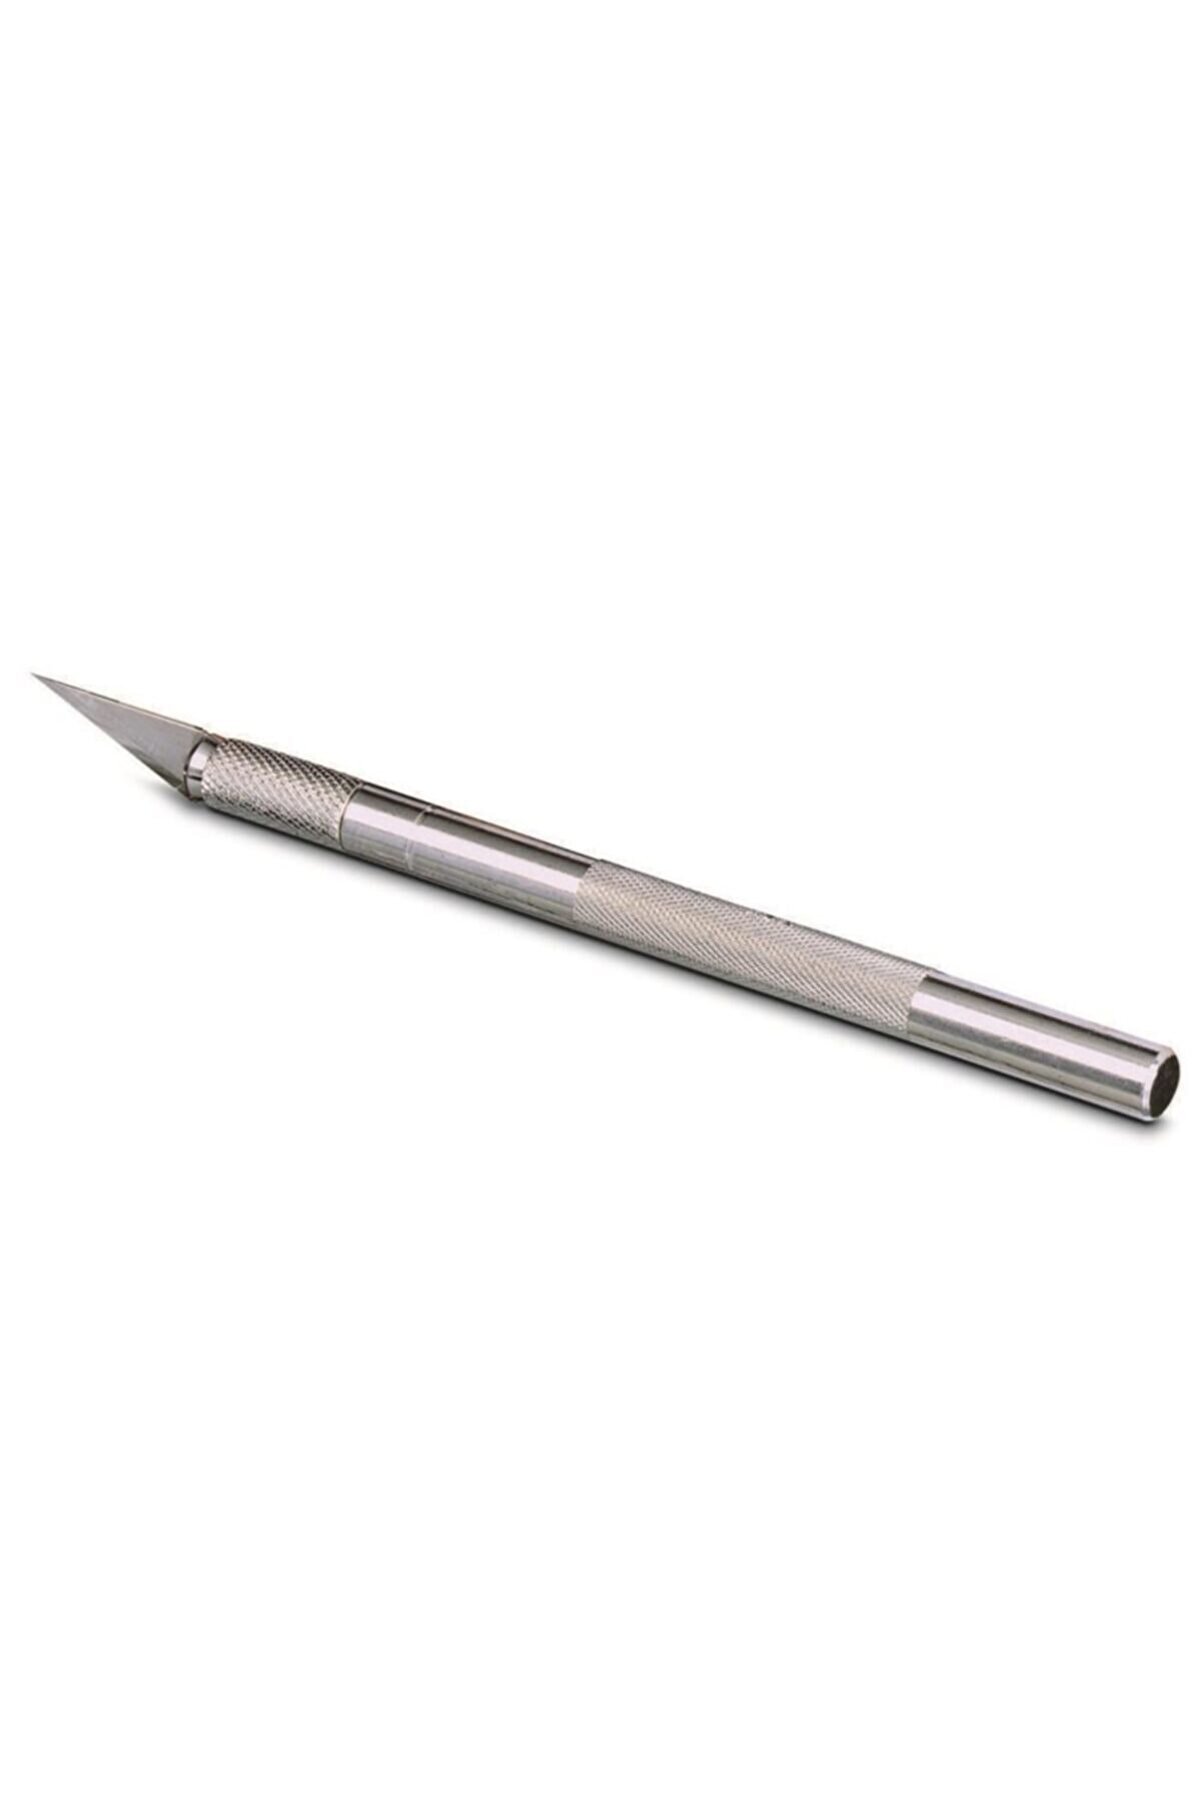 Stanley Hobi Maket Bıçağı 120 Mm 0-10-401 St010401